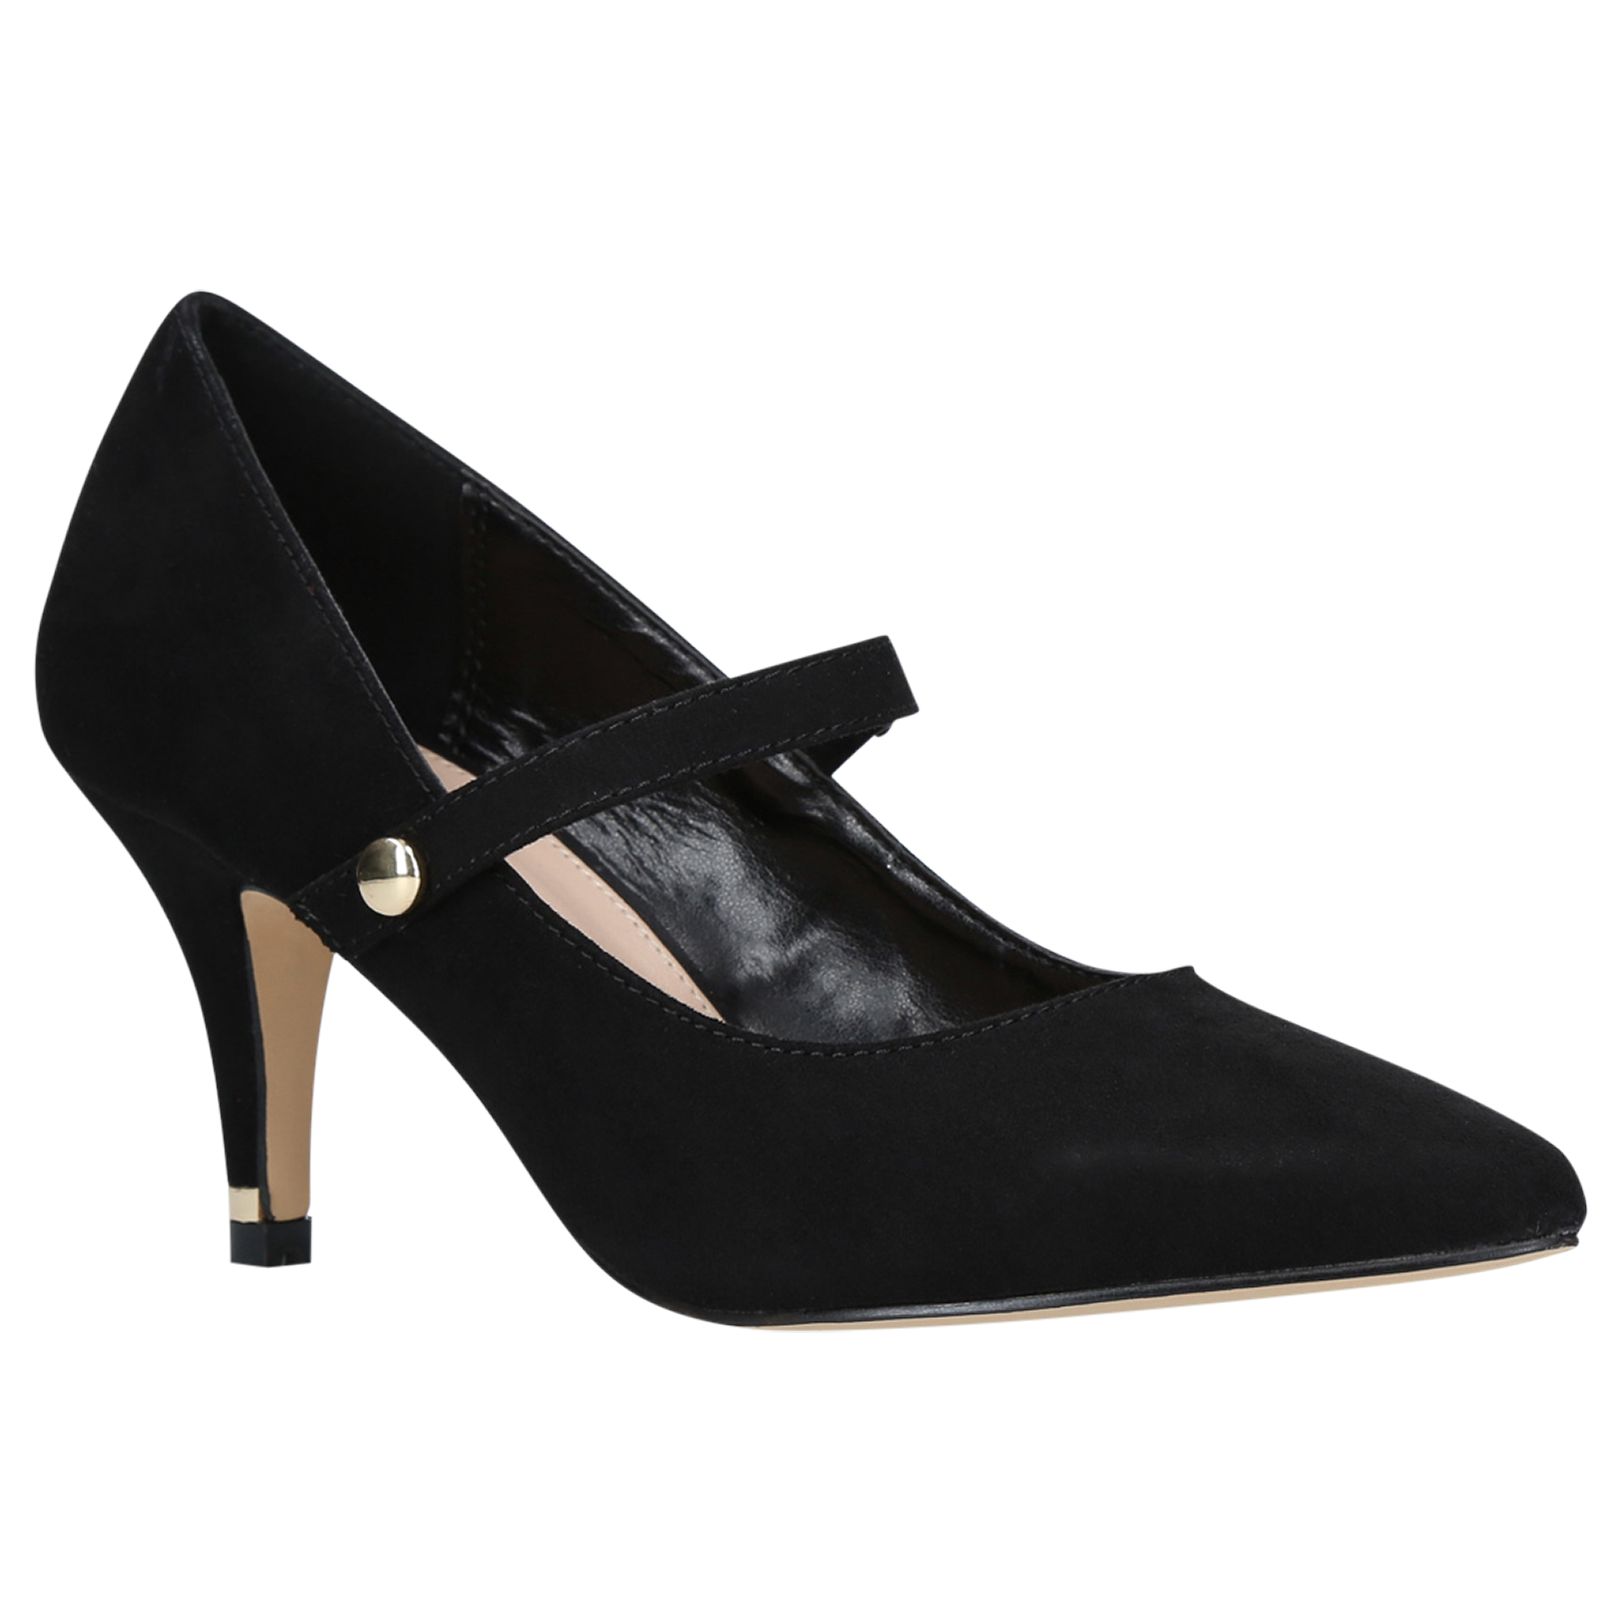 Carvela Kream Court Shoes, Black, 7